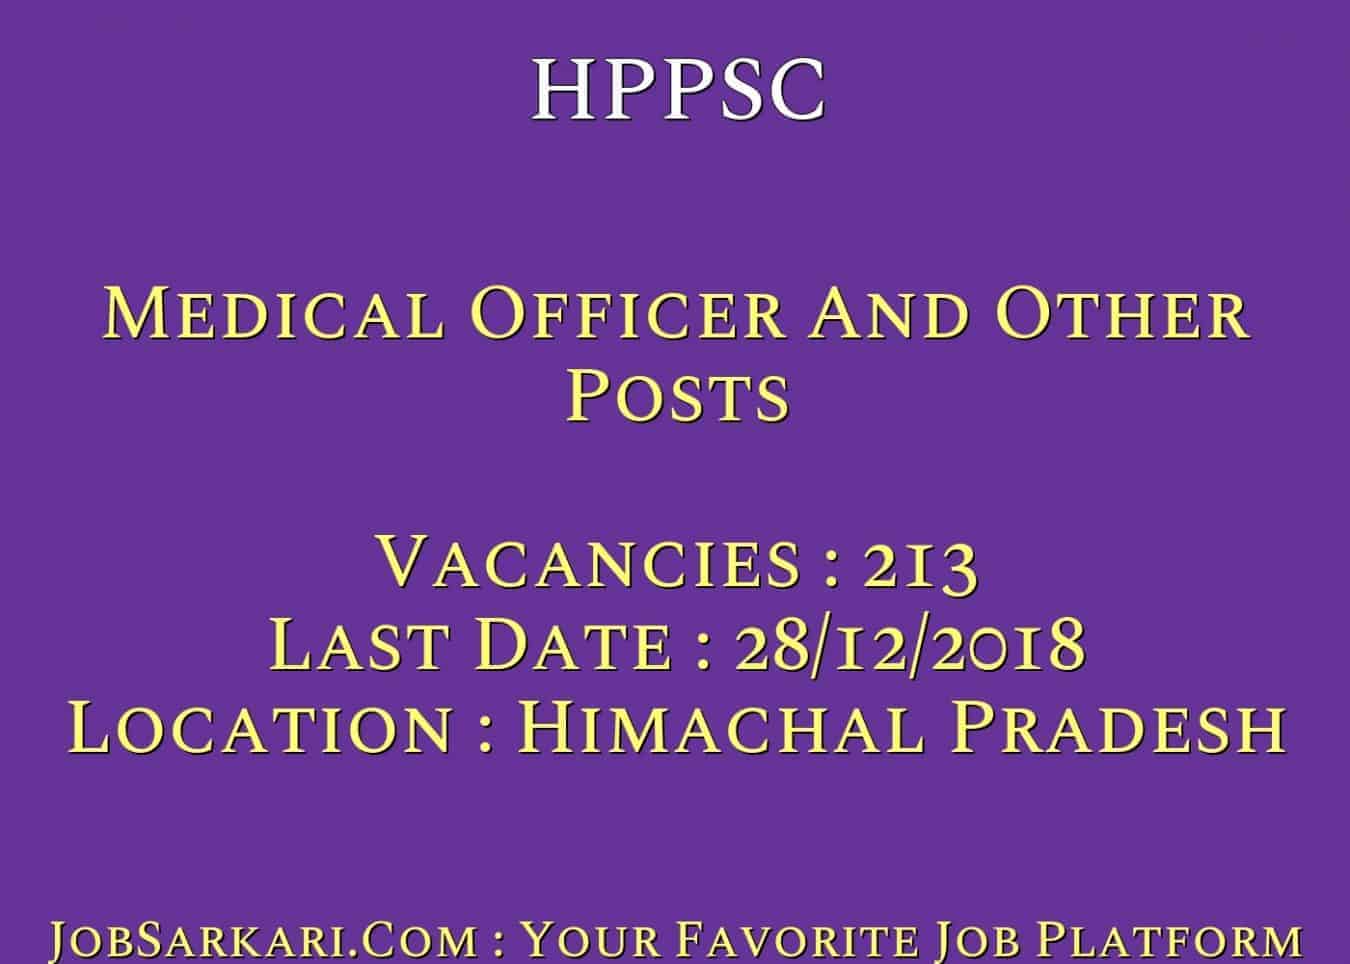 HPPSC Recruitment 2018 For Medical Officer And Other Posts Govt Job